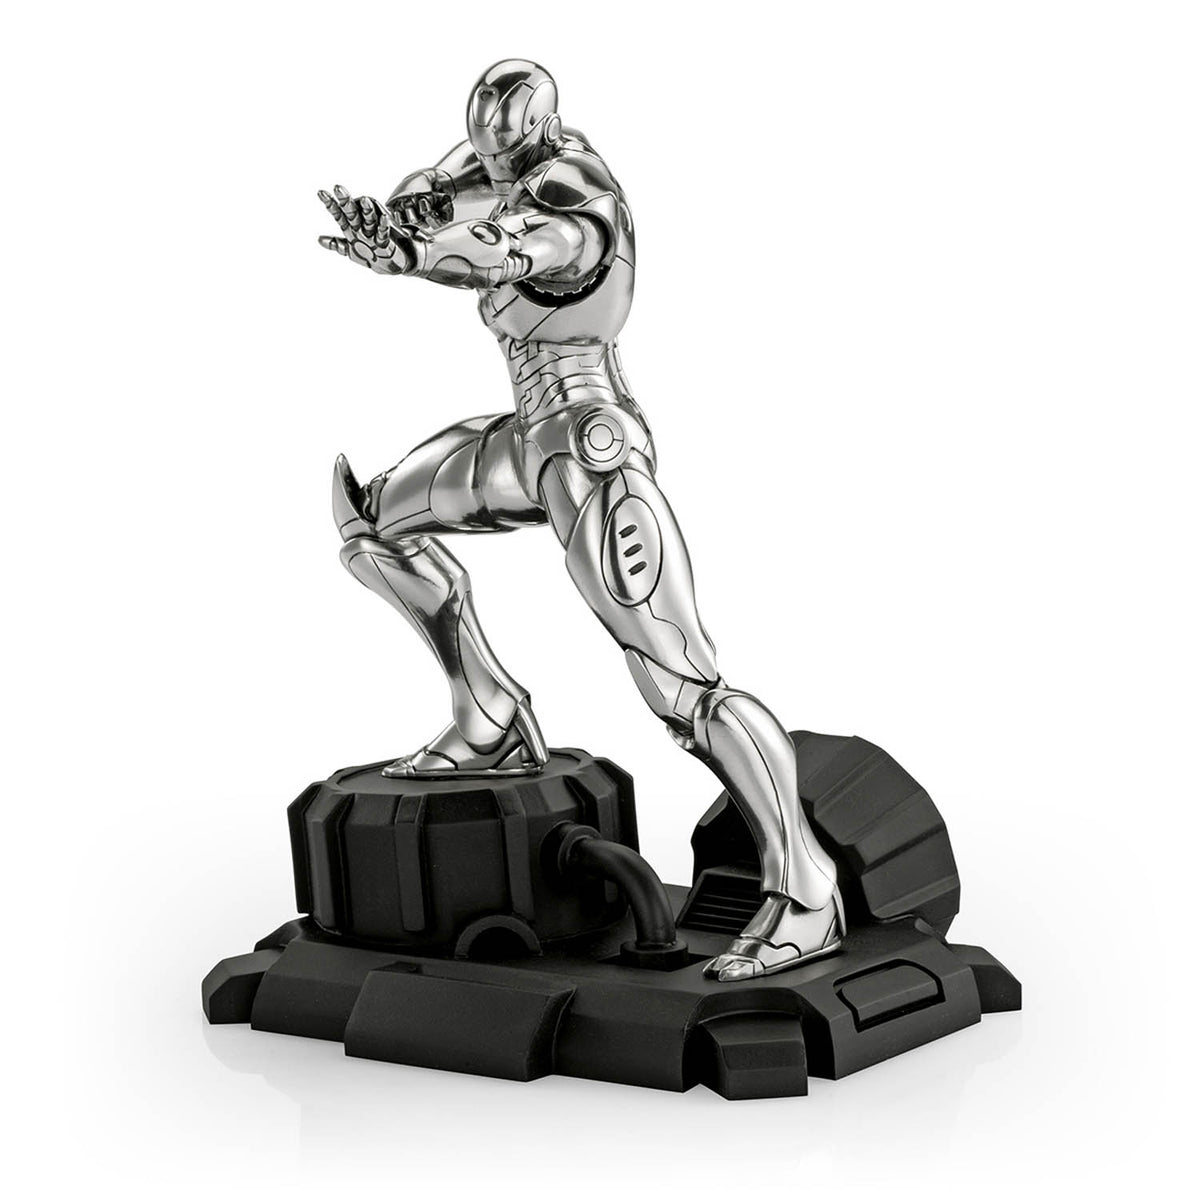 Limited Edition Iron Man Figurine